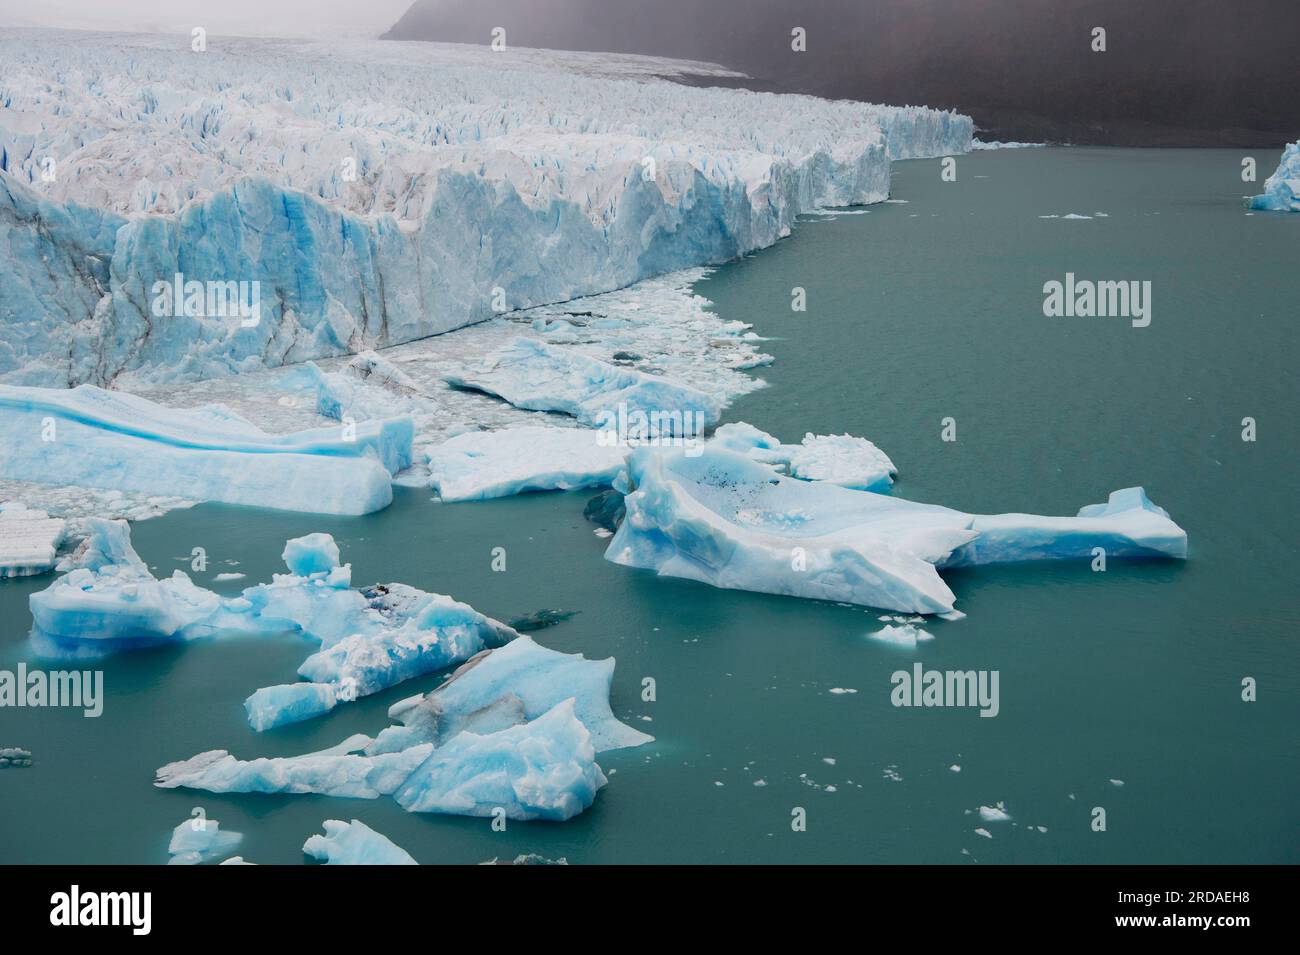 Perito Moreno Glacier in Los Glaciares National Park, Argentina, South America Stock Photo